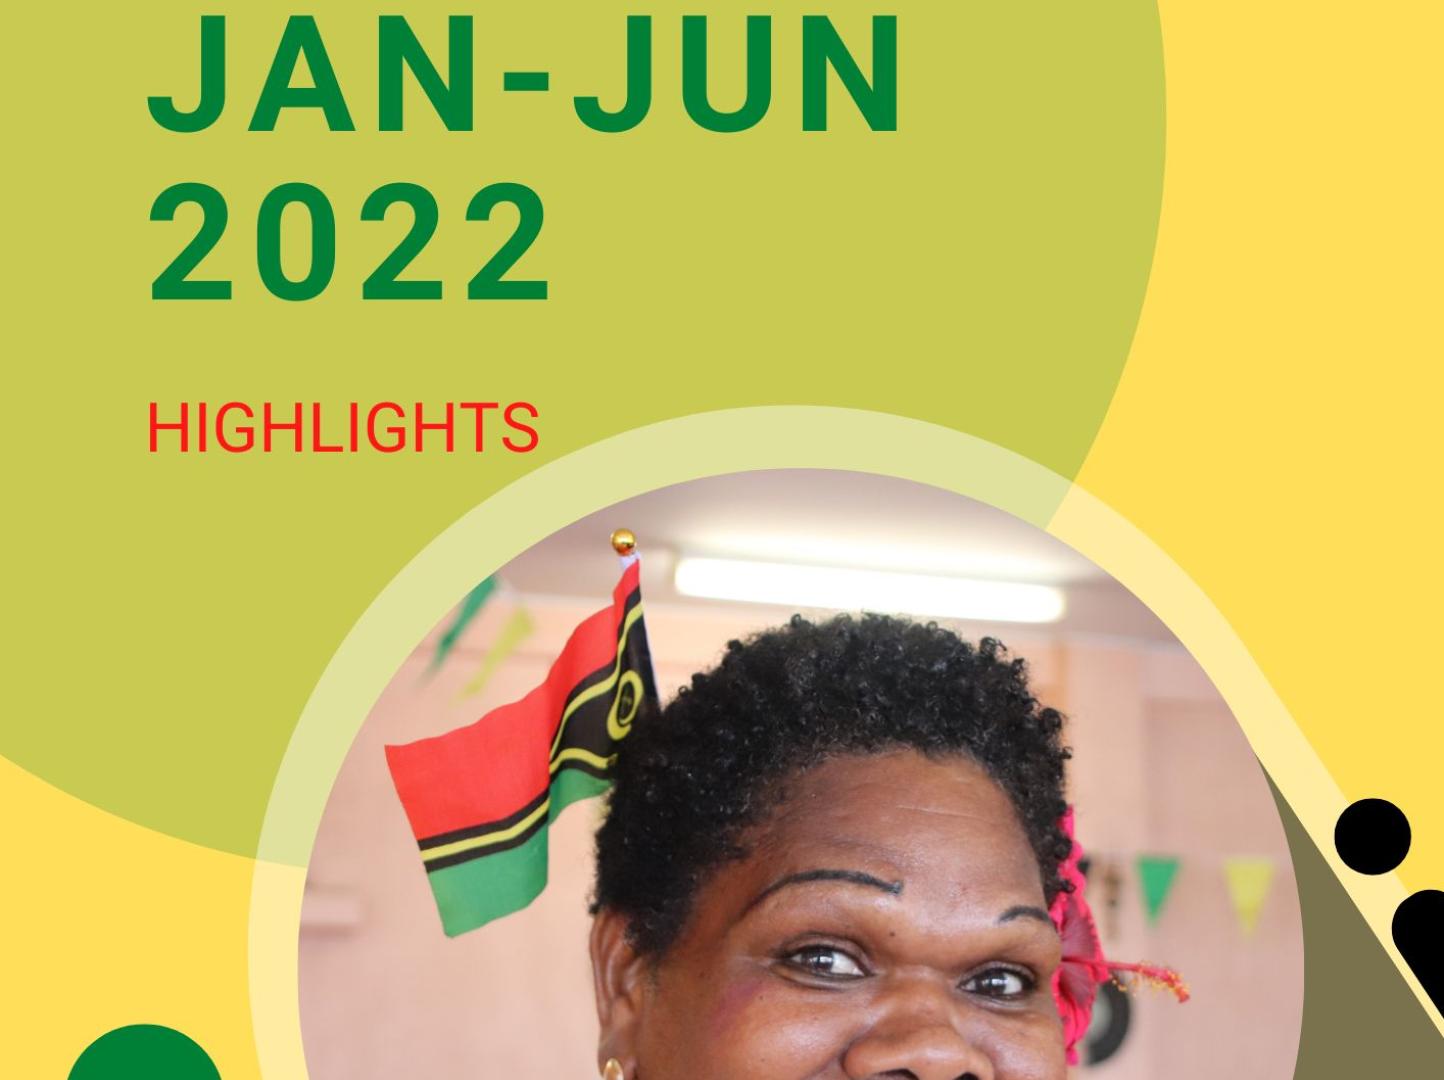 Spotlight Initiative's January-June 2022 Vanuatu Country Programme Highlights